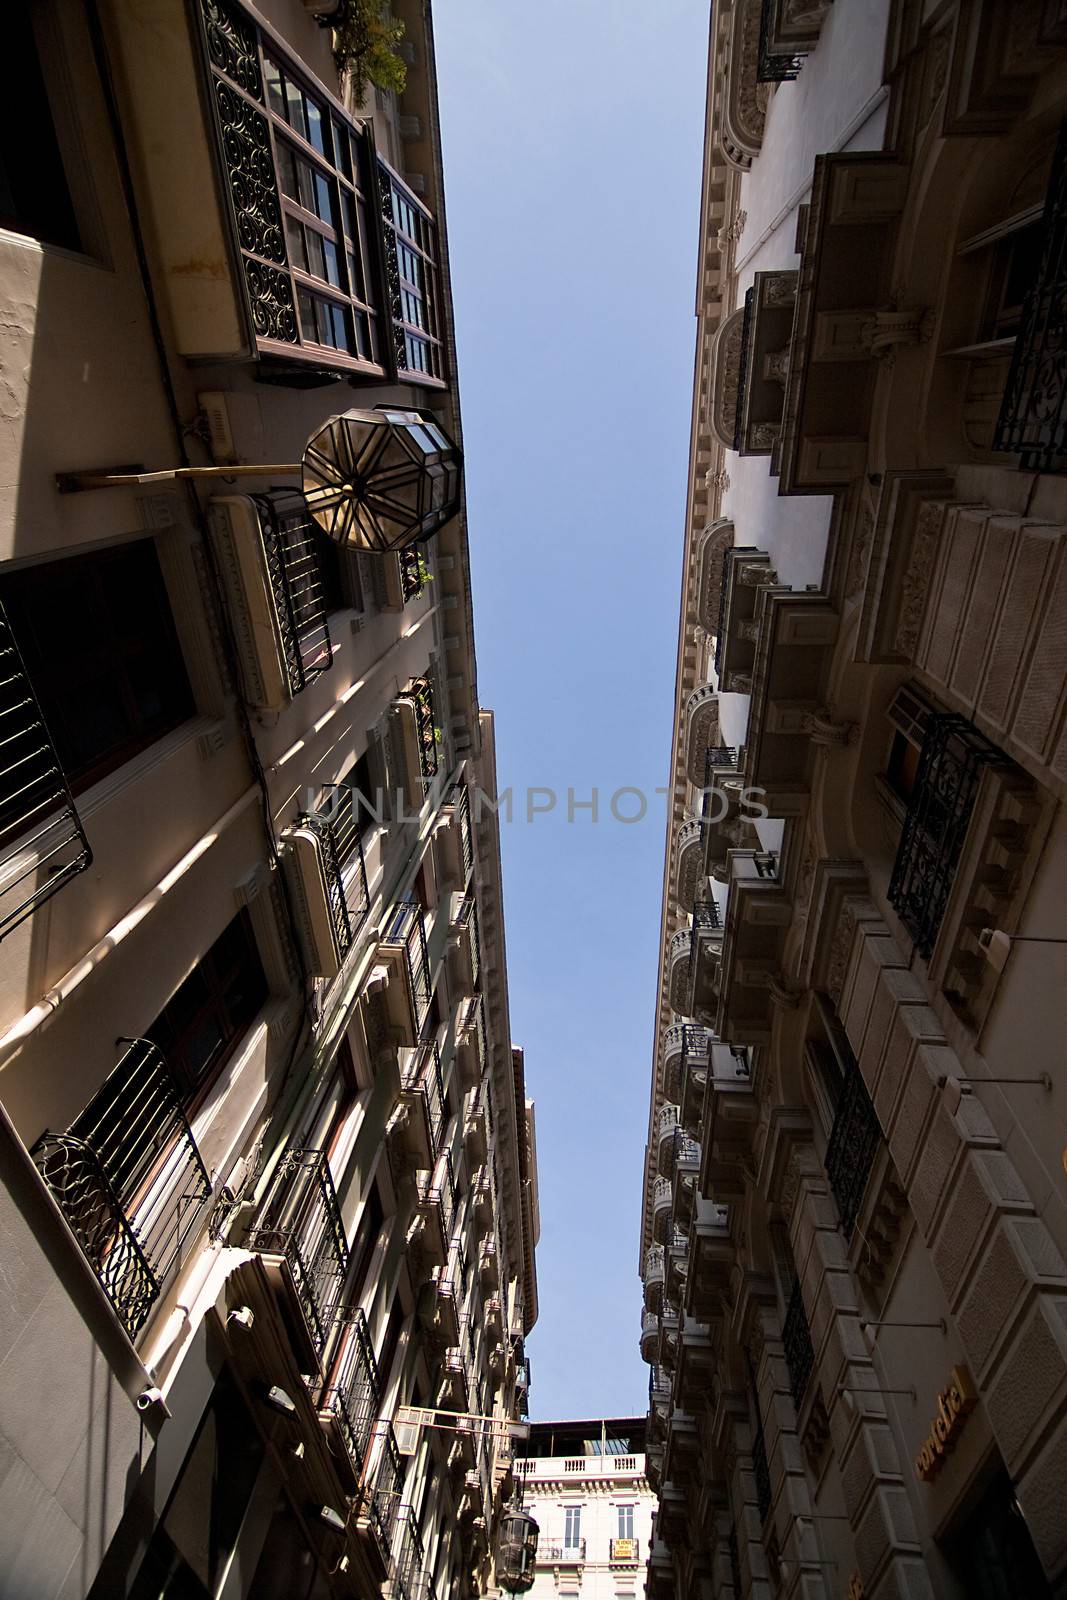 Street of Granada, Spain by digicomphoto